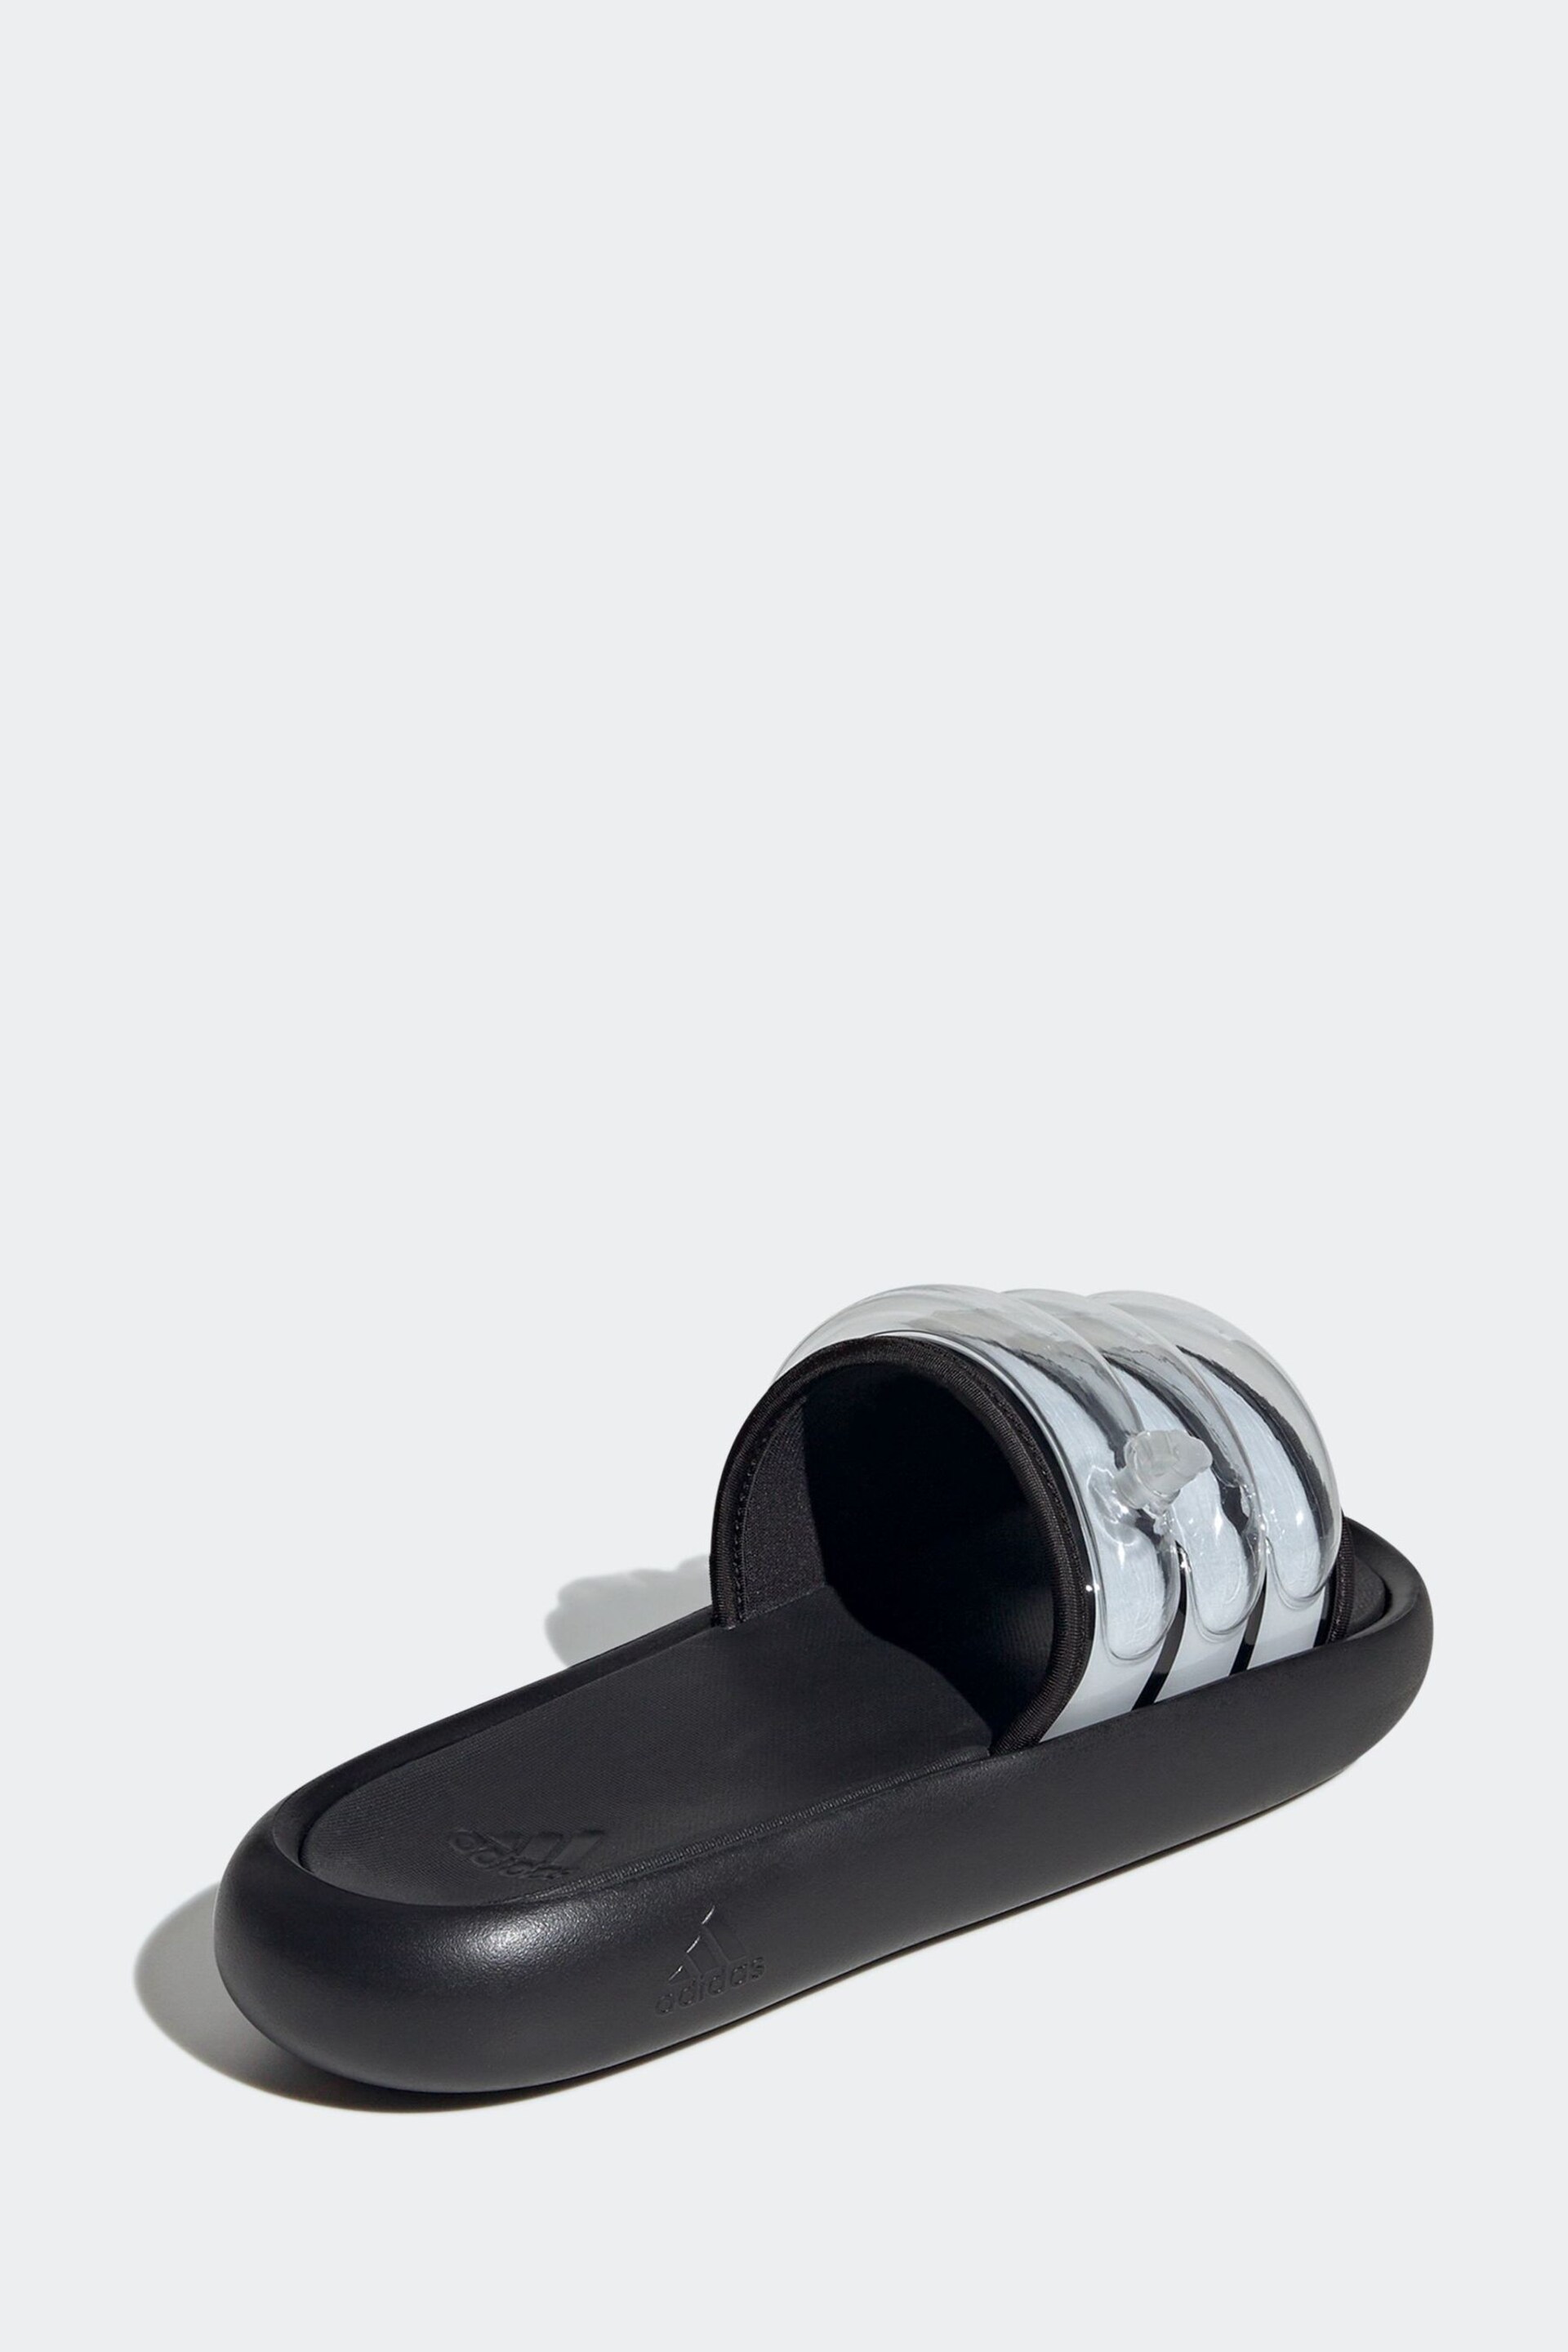 adidas Black Sportswear Zplaash Slides - Image 4 of 9